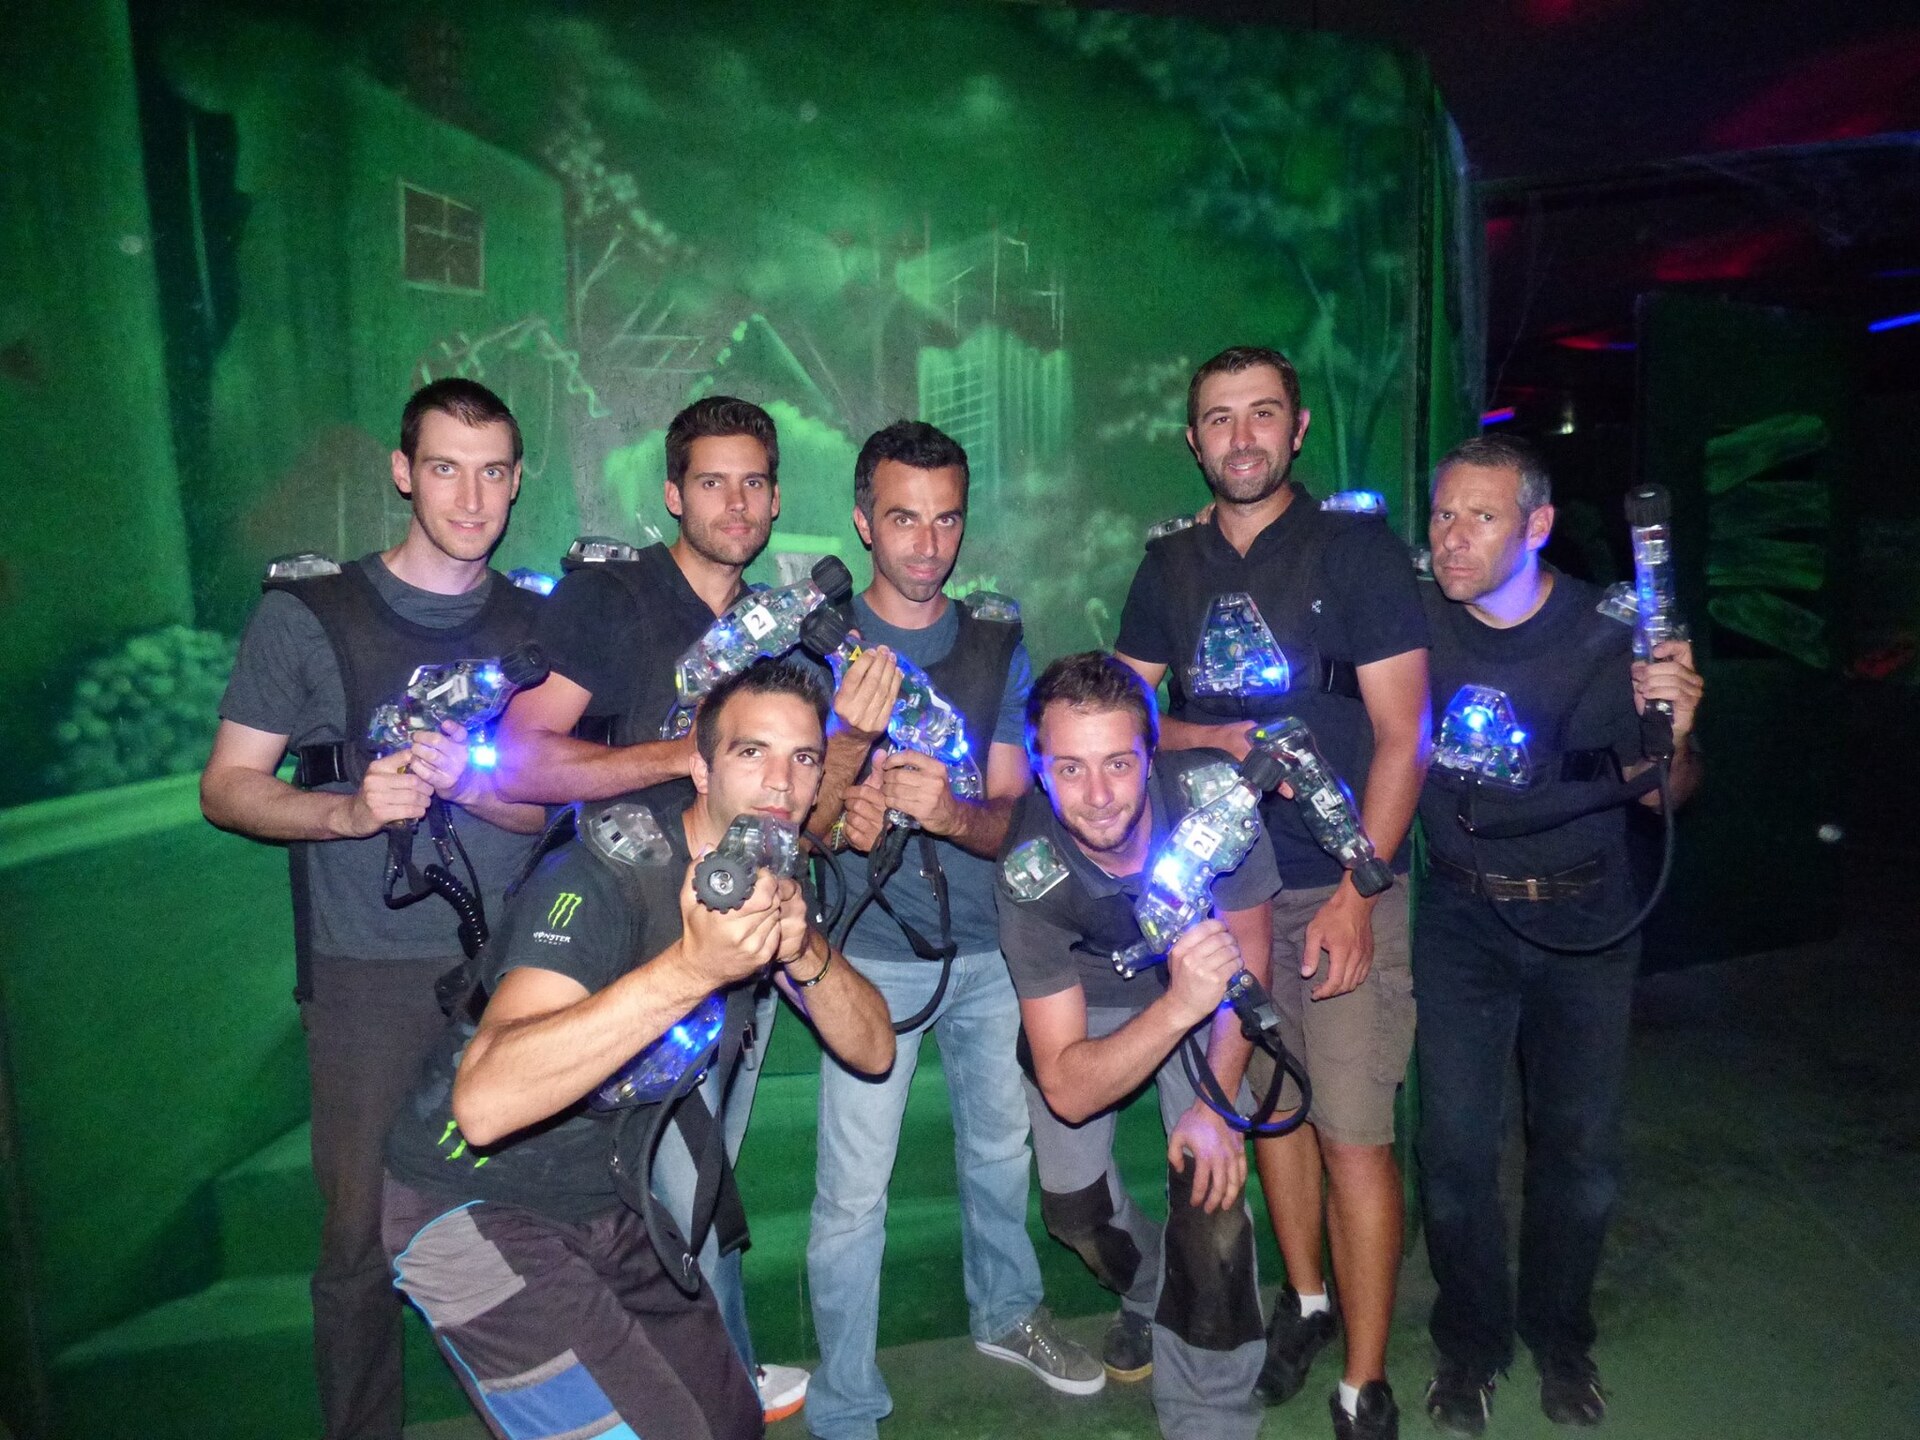 L'équipe CODIA 47 remporte le tournoi de Laser Game !